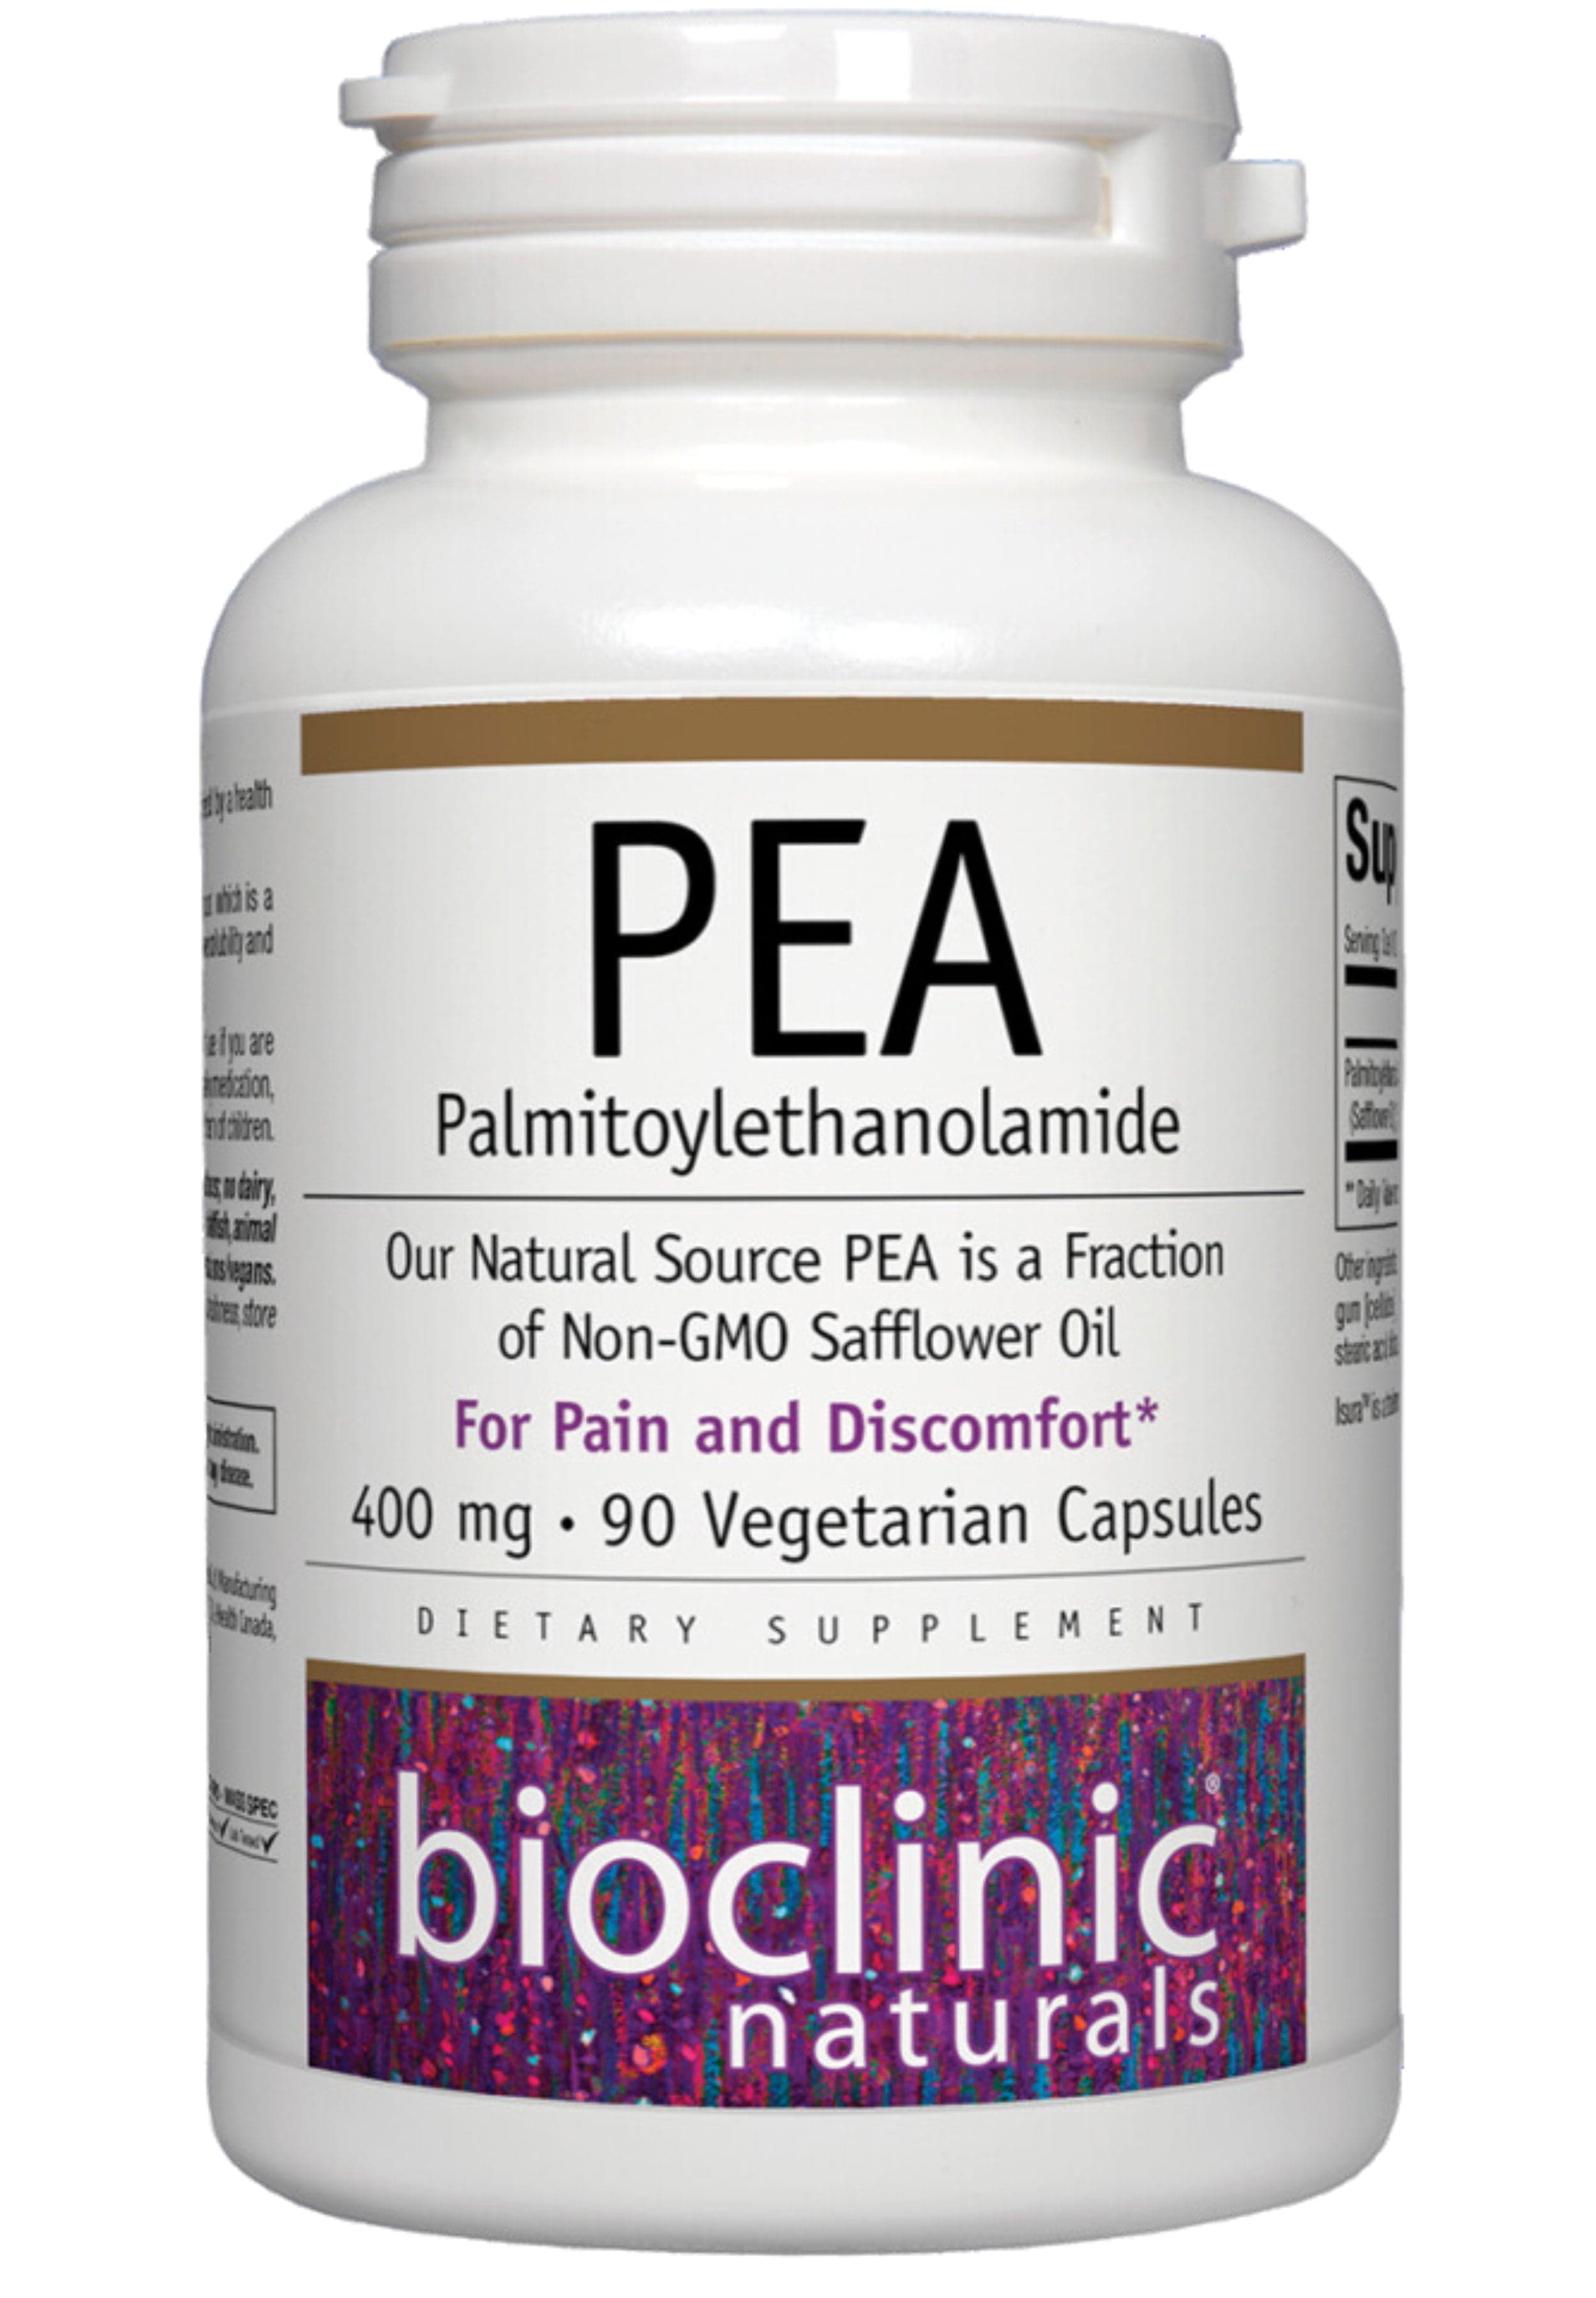 Bioclinic Naturals PEA (Palmitoylethanolamide)